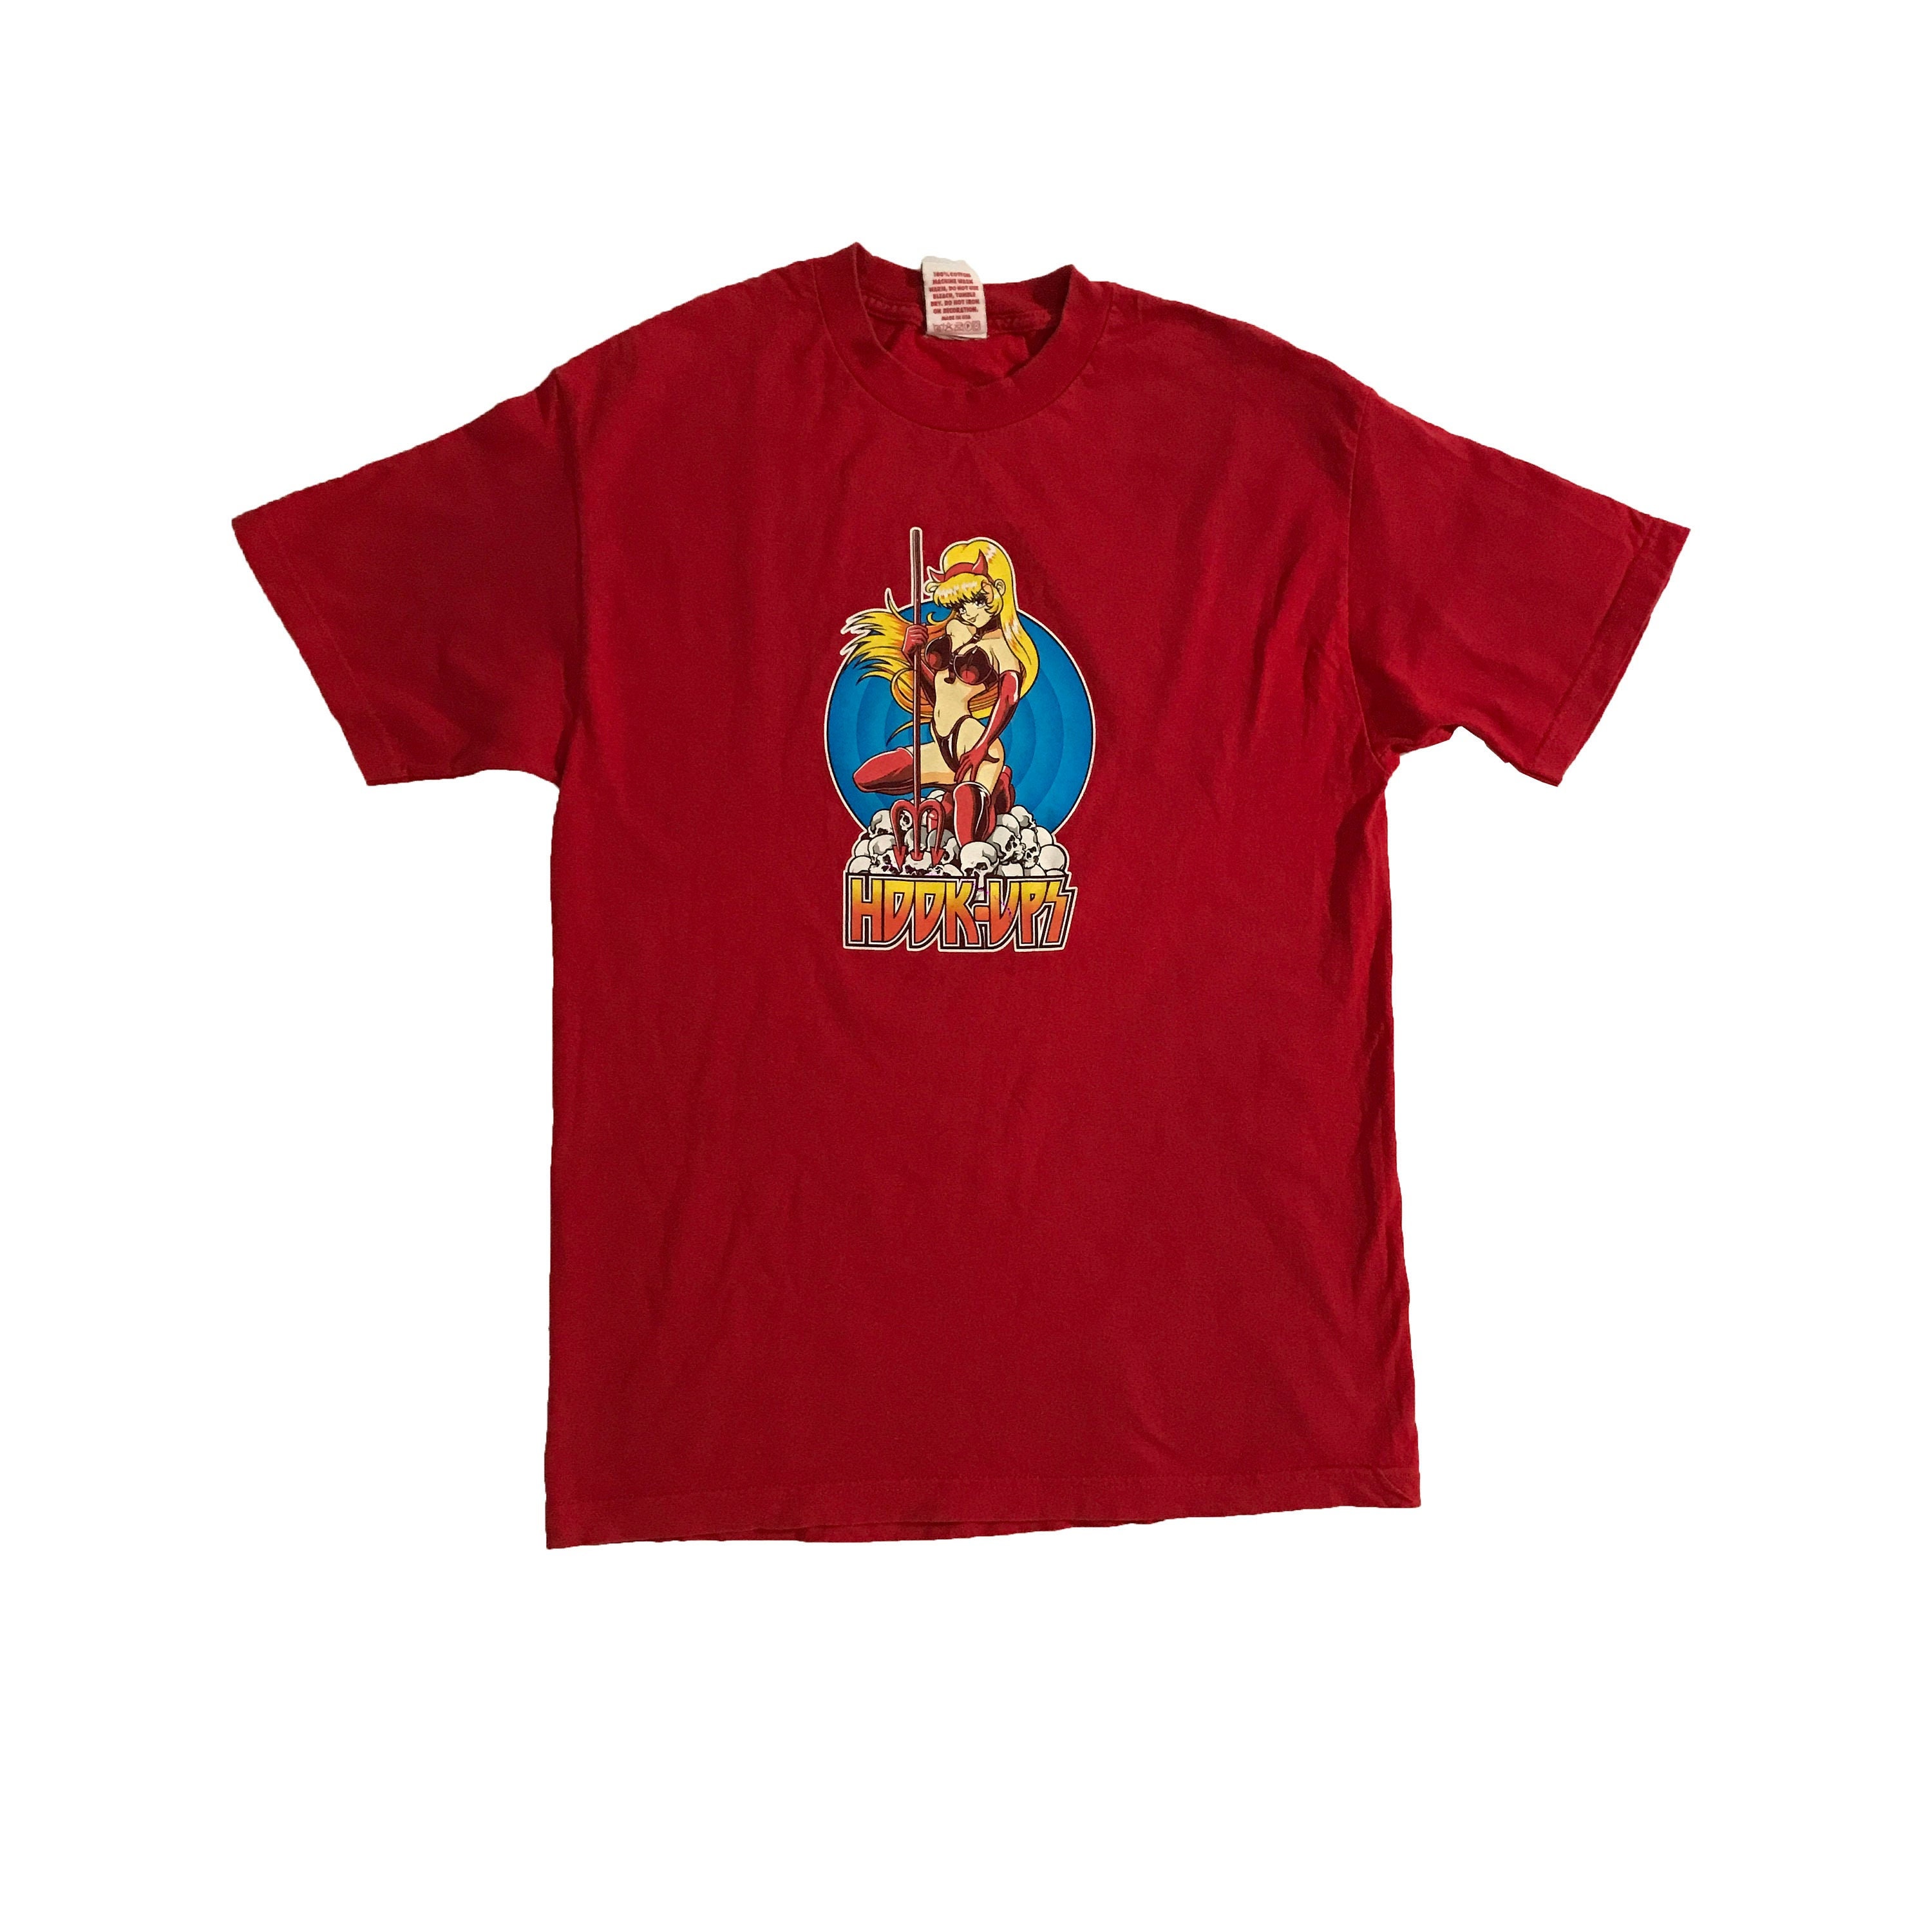 Vintage 90's Hook-ups T-shirt Rare Skateboarding Brand Retro Anime Manga  Style Big Logo Old School Street Skate Wear Red Tee Size L 